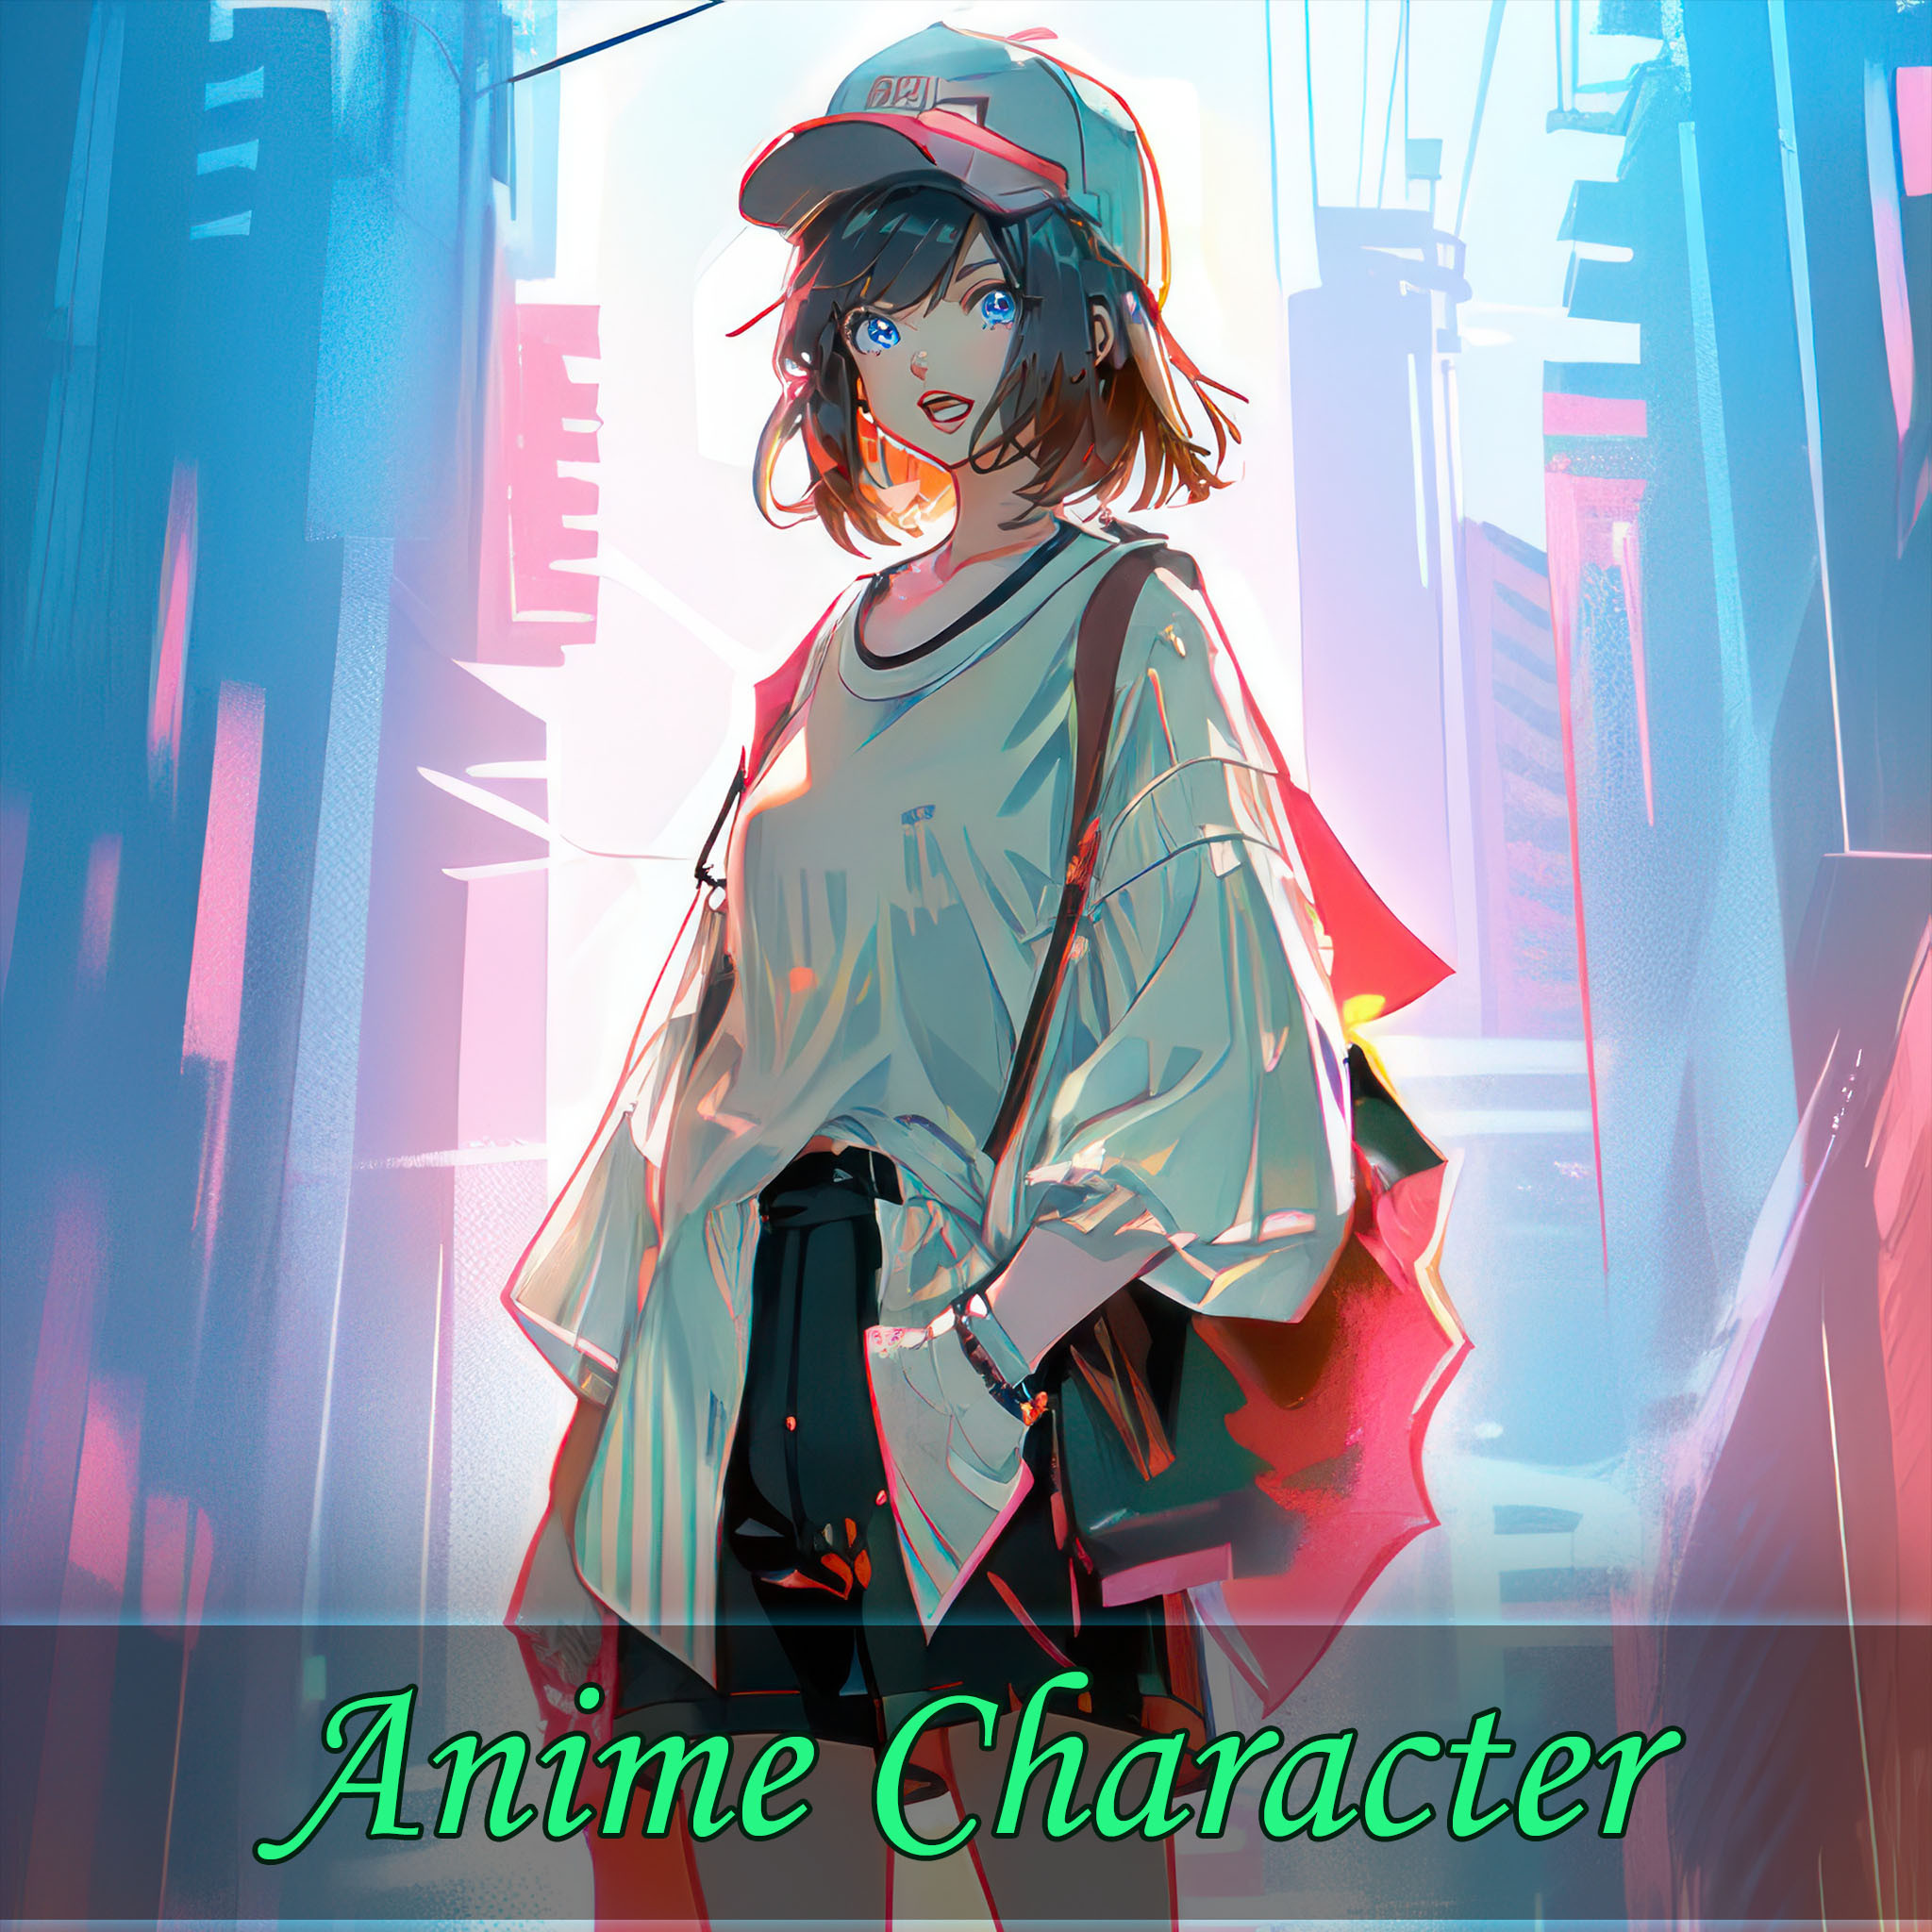 ArtStation - +230 Anime Sketch Reference (4k)